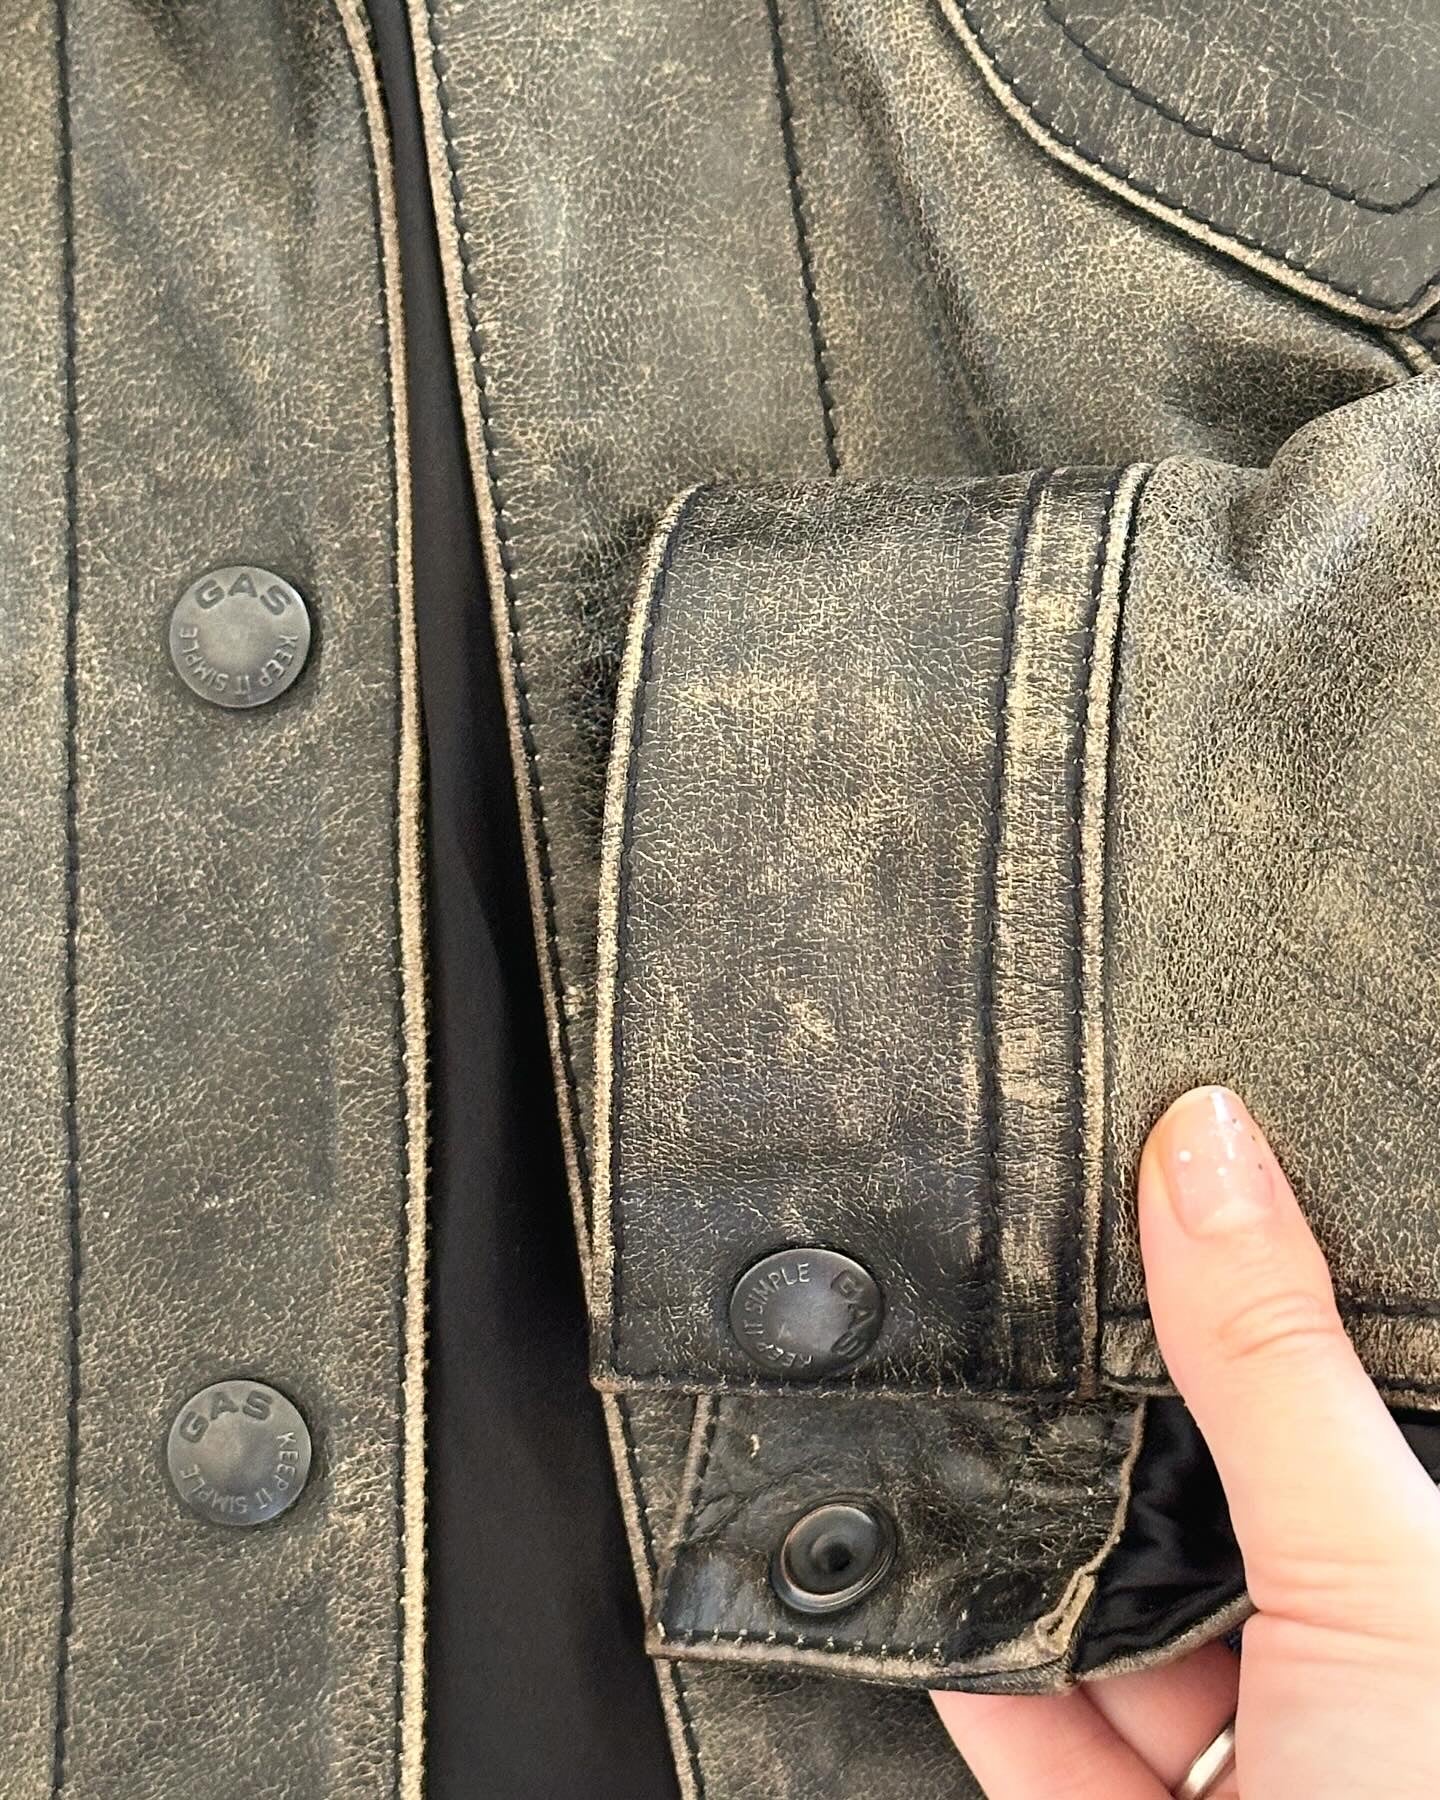 Trendy vintage distressed leather jacket Gas